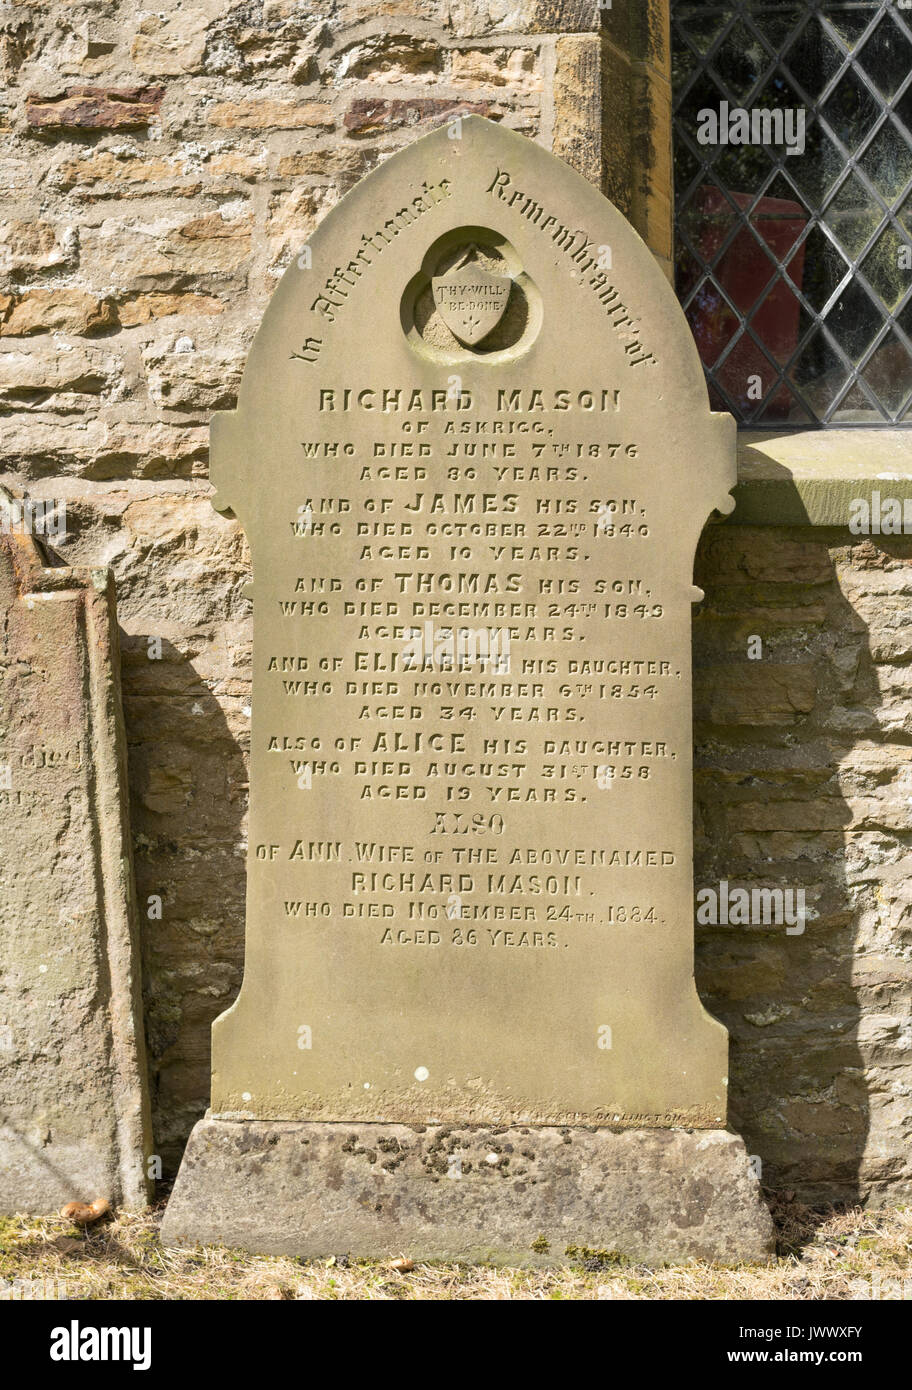 Gravestone of Richard Mason and his family who died before him, Askrigg churchyard, Wensleydale, Yorkshire, England, UK Stock Photo